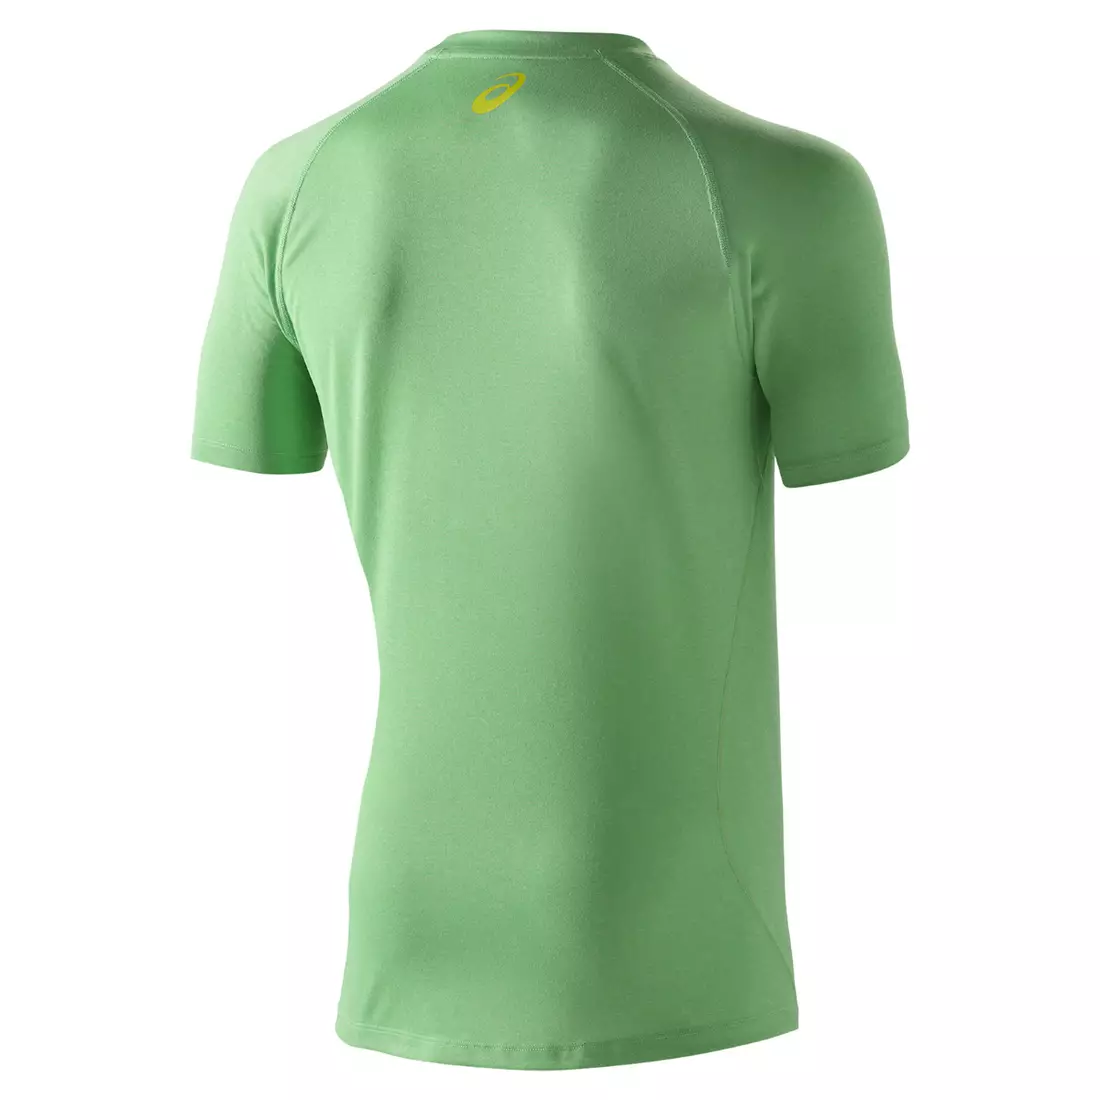 ASICS 110519-0489 SOUKAI GRAPHIC TOP – Herren-Lauf-T-Shirt, Farbe: Grün